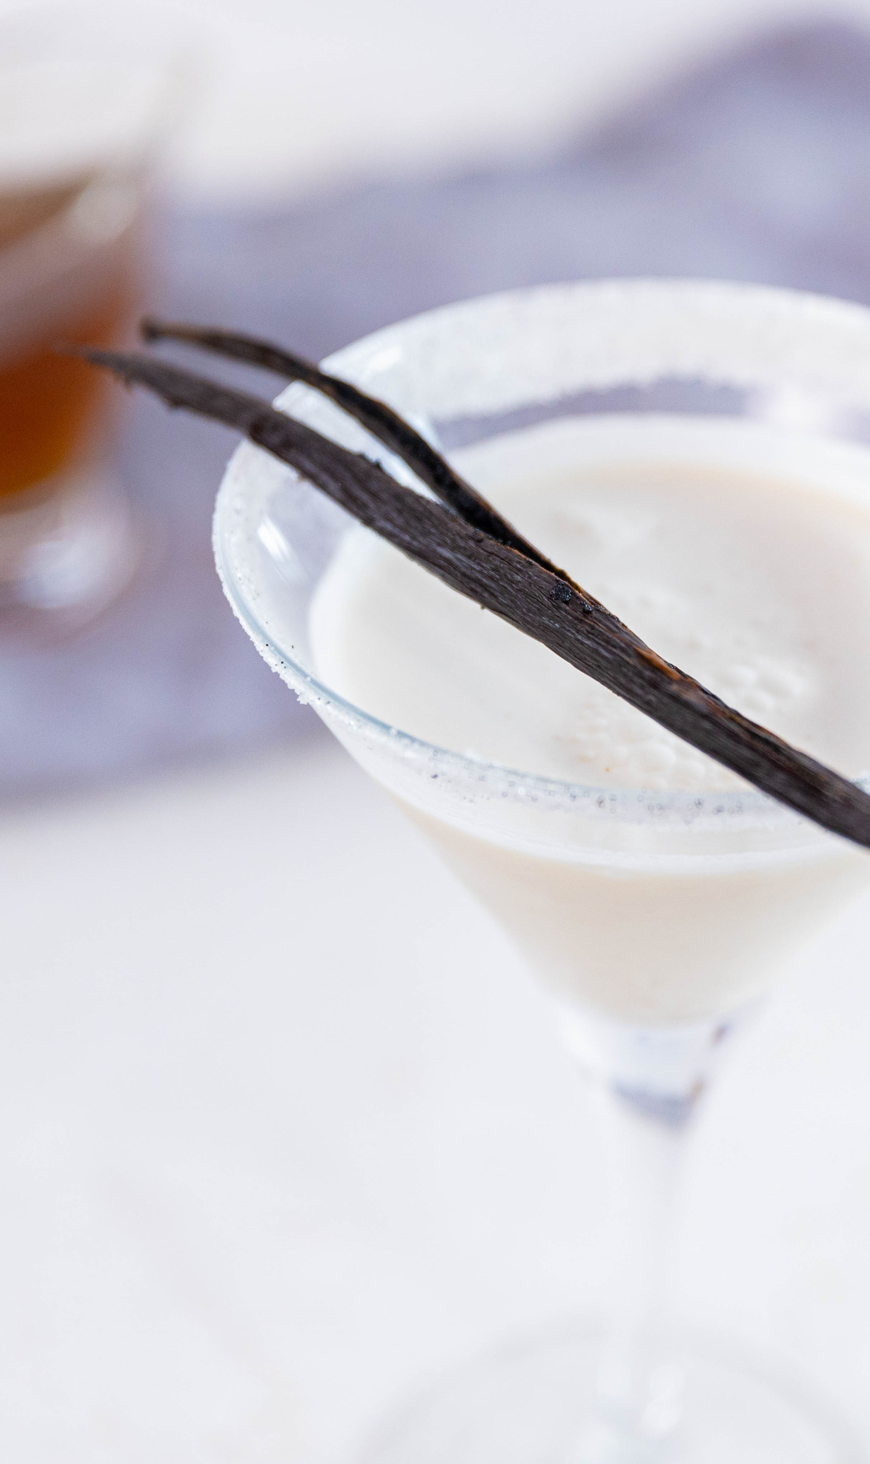 Vanilla Cream Cocktail